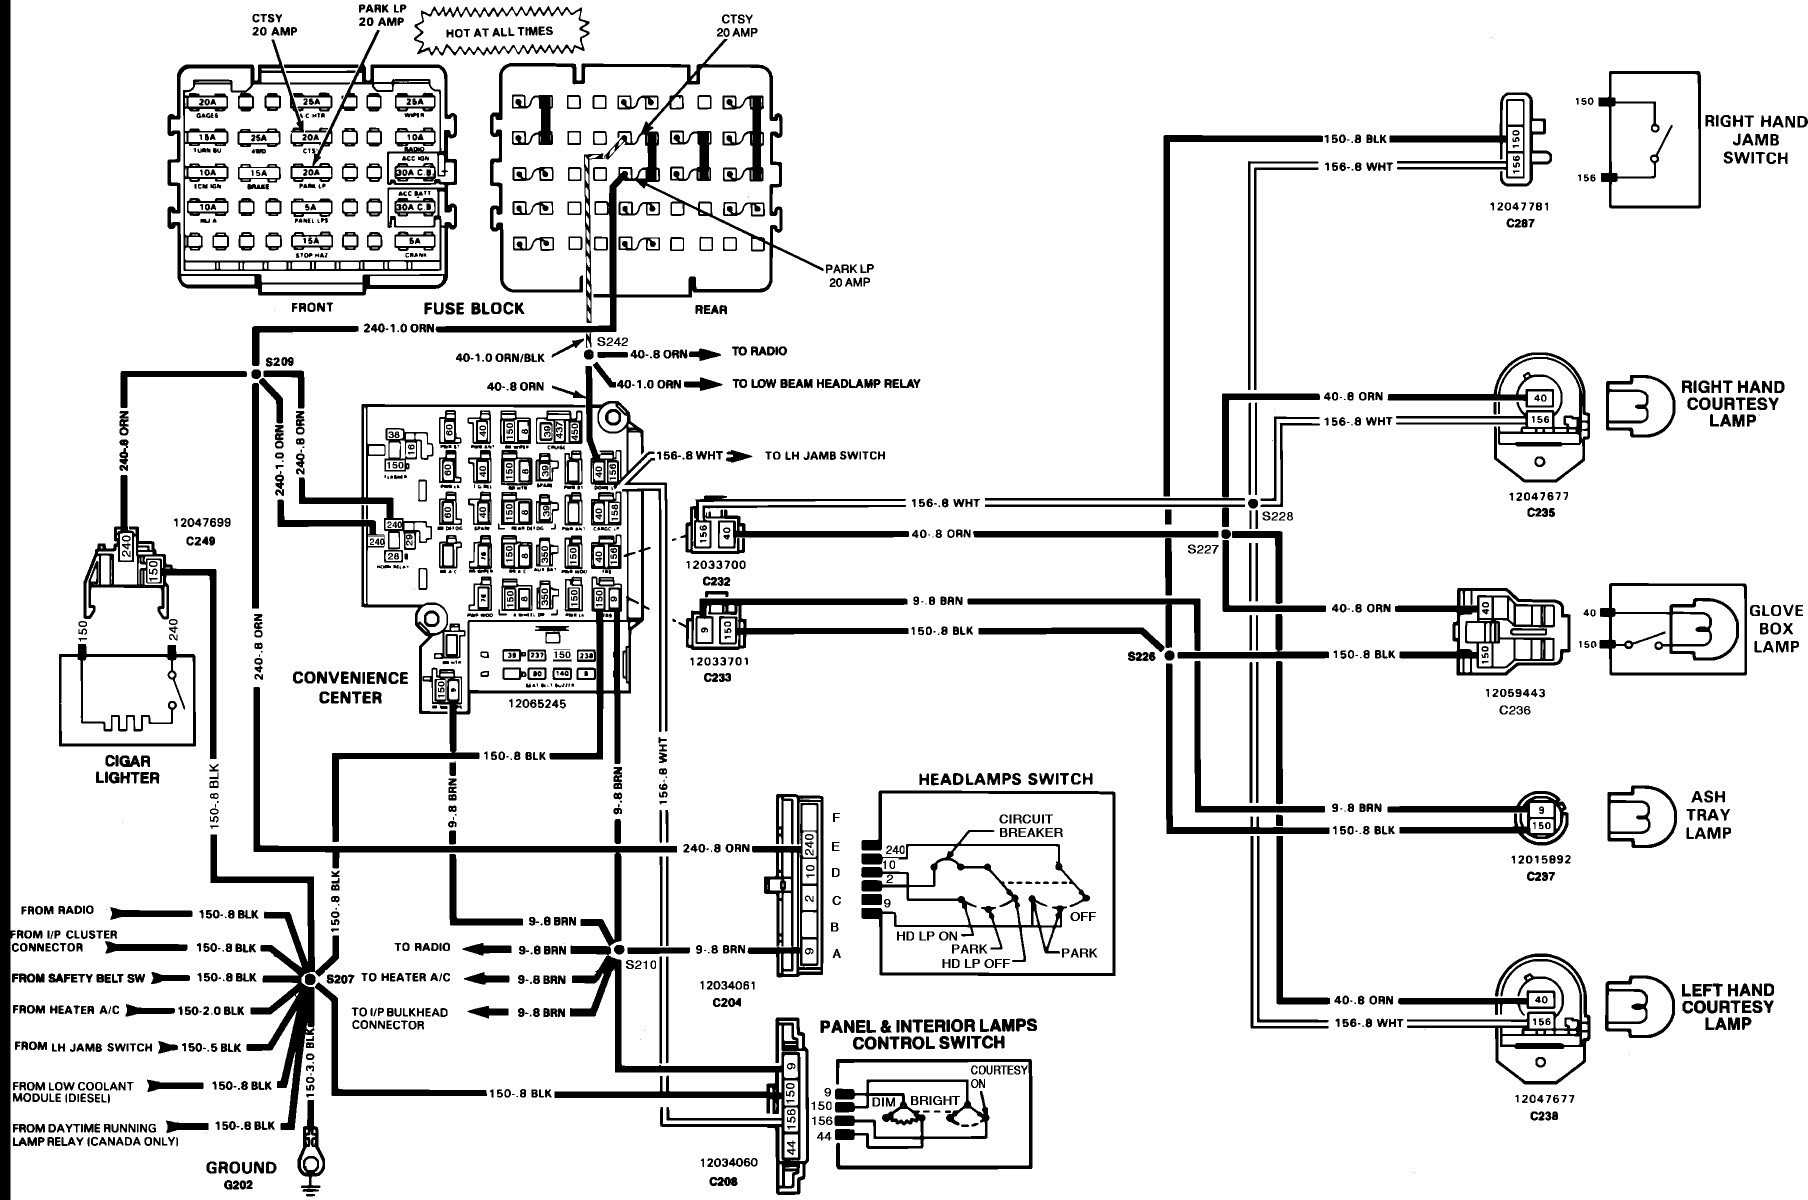 2001 Chevy Malibu Engine Diagram 91 S10 Wiring Diagram Pdf Layout Wiring Diagrams • Of 2001 Chevy Malibu Engine Diagram